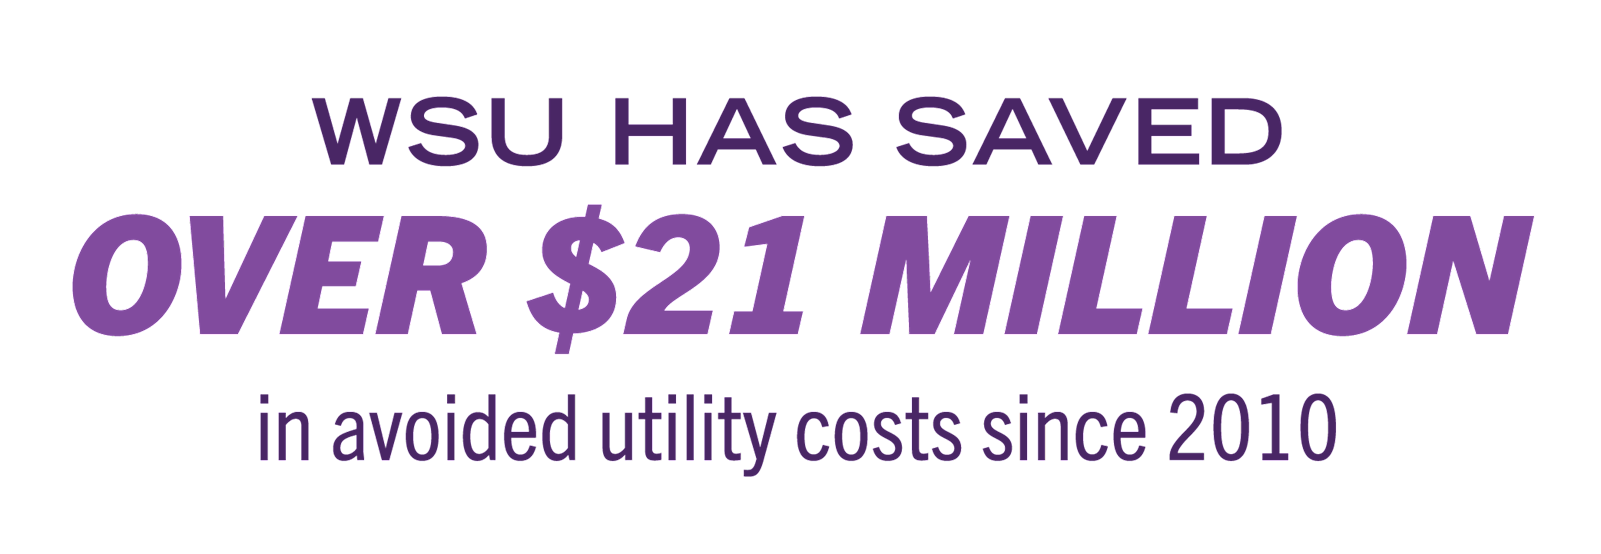 WSU saved over $21 million on utilities since 2010.